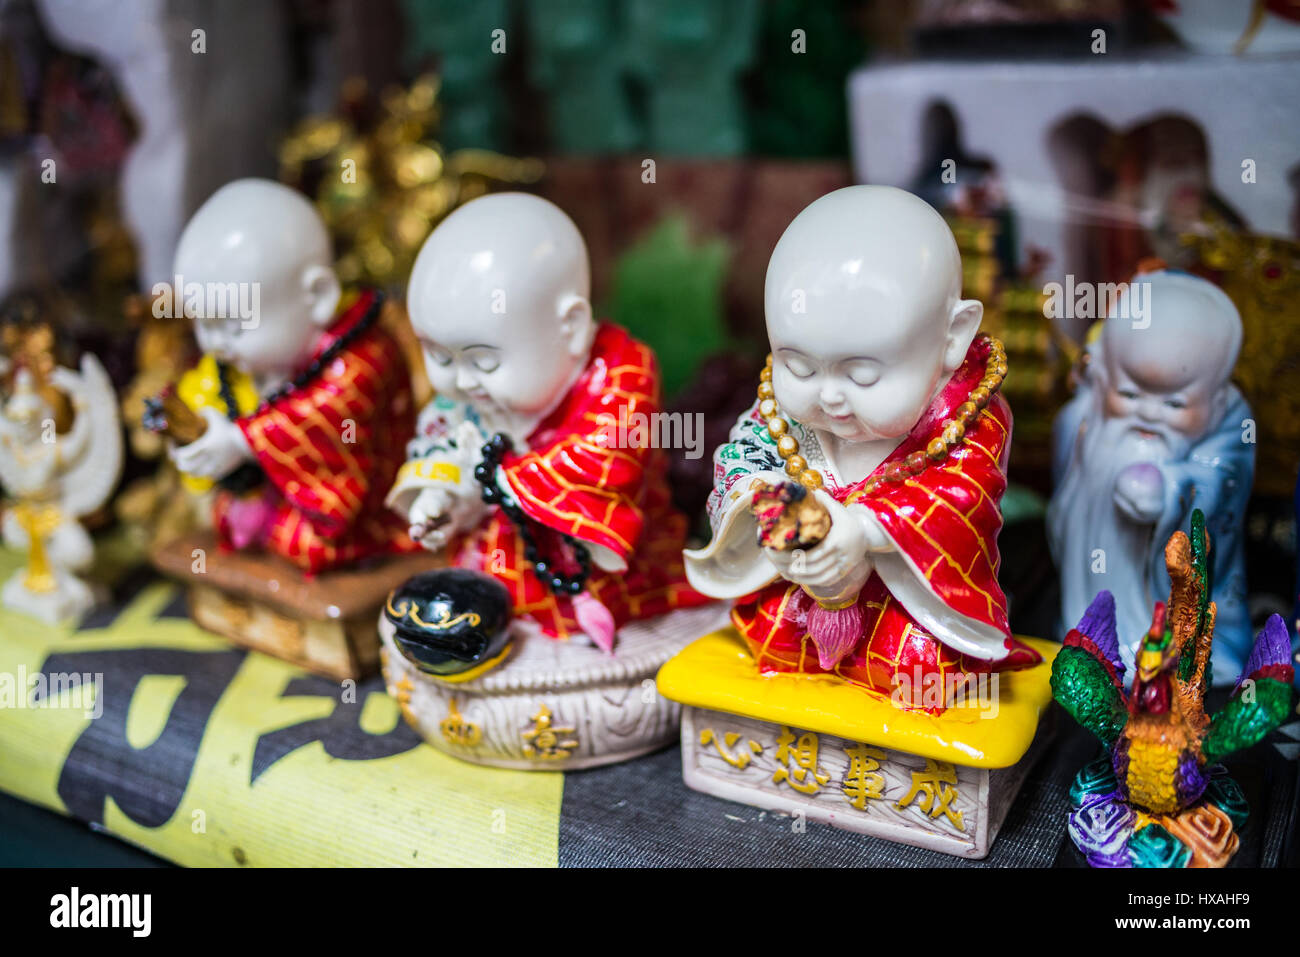 Cloe-up of souvenirs in the local market, Chinatown, Bangkok, Thailan, Asia Stock Photo